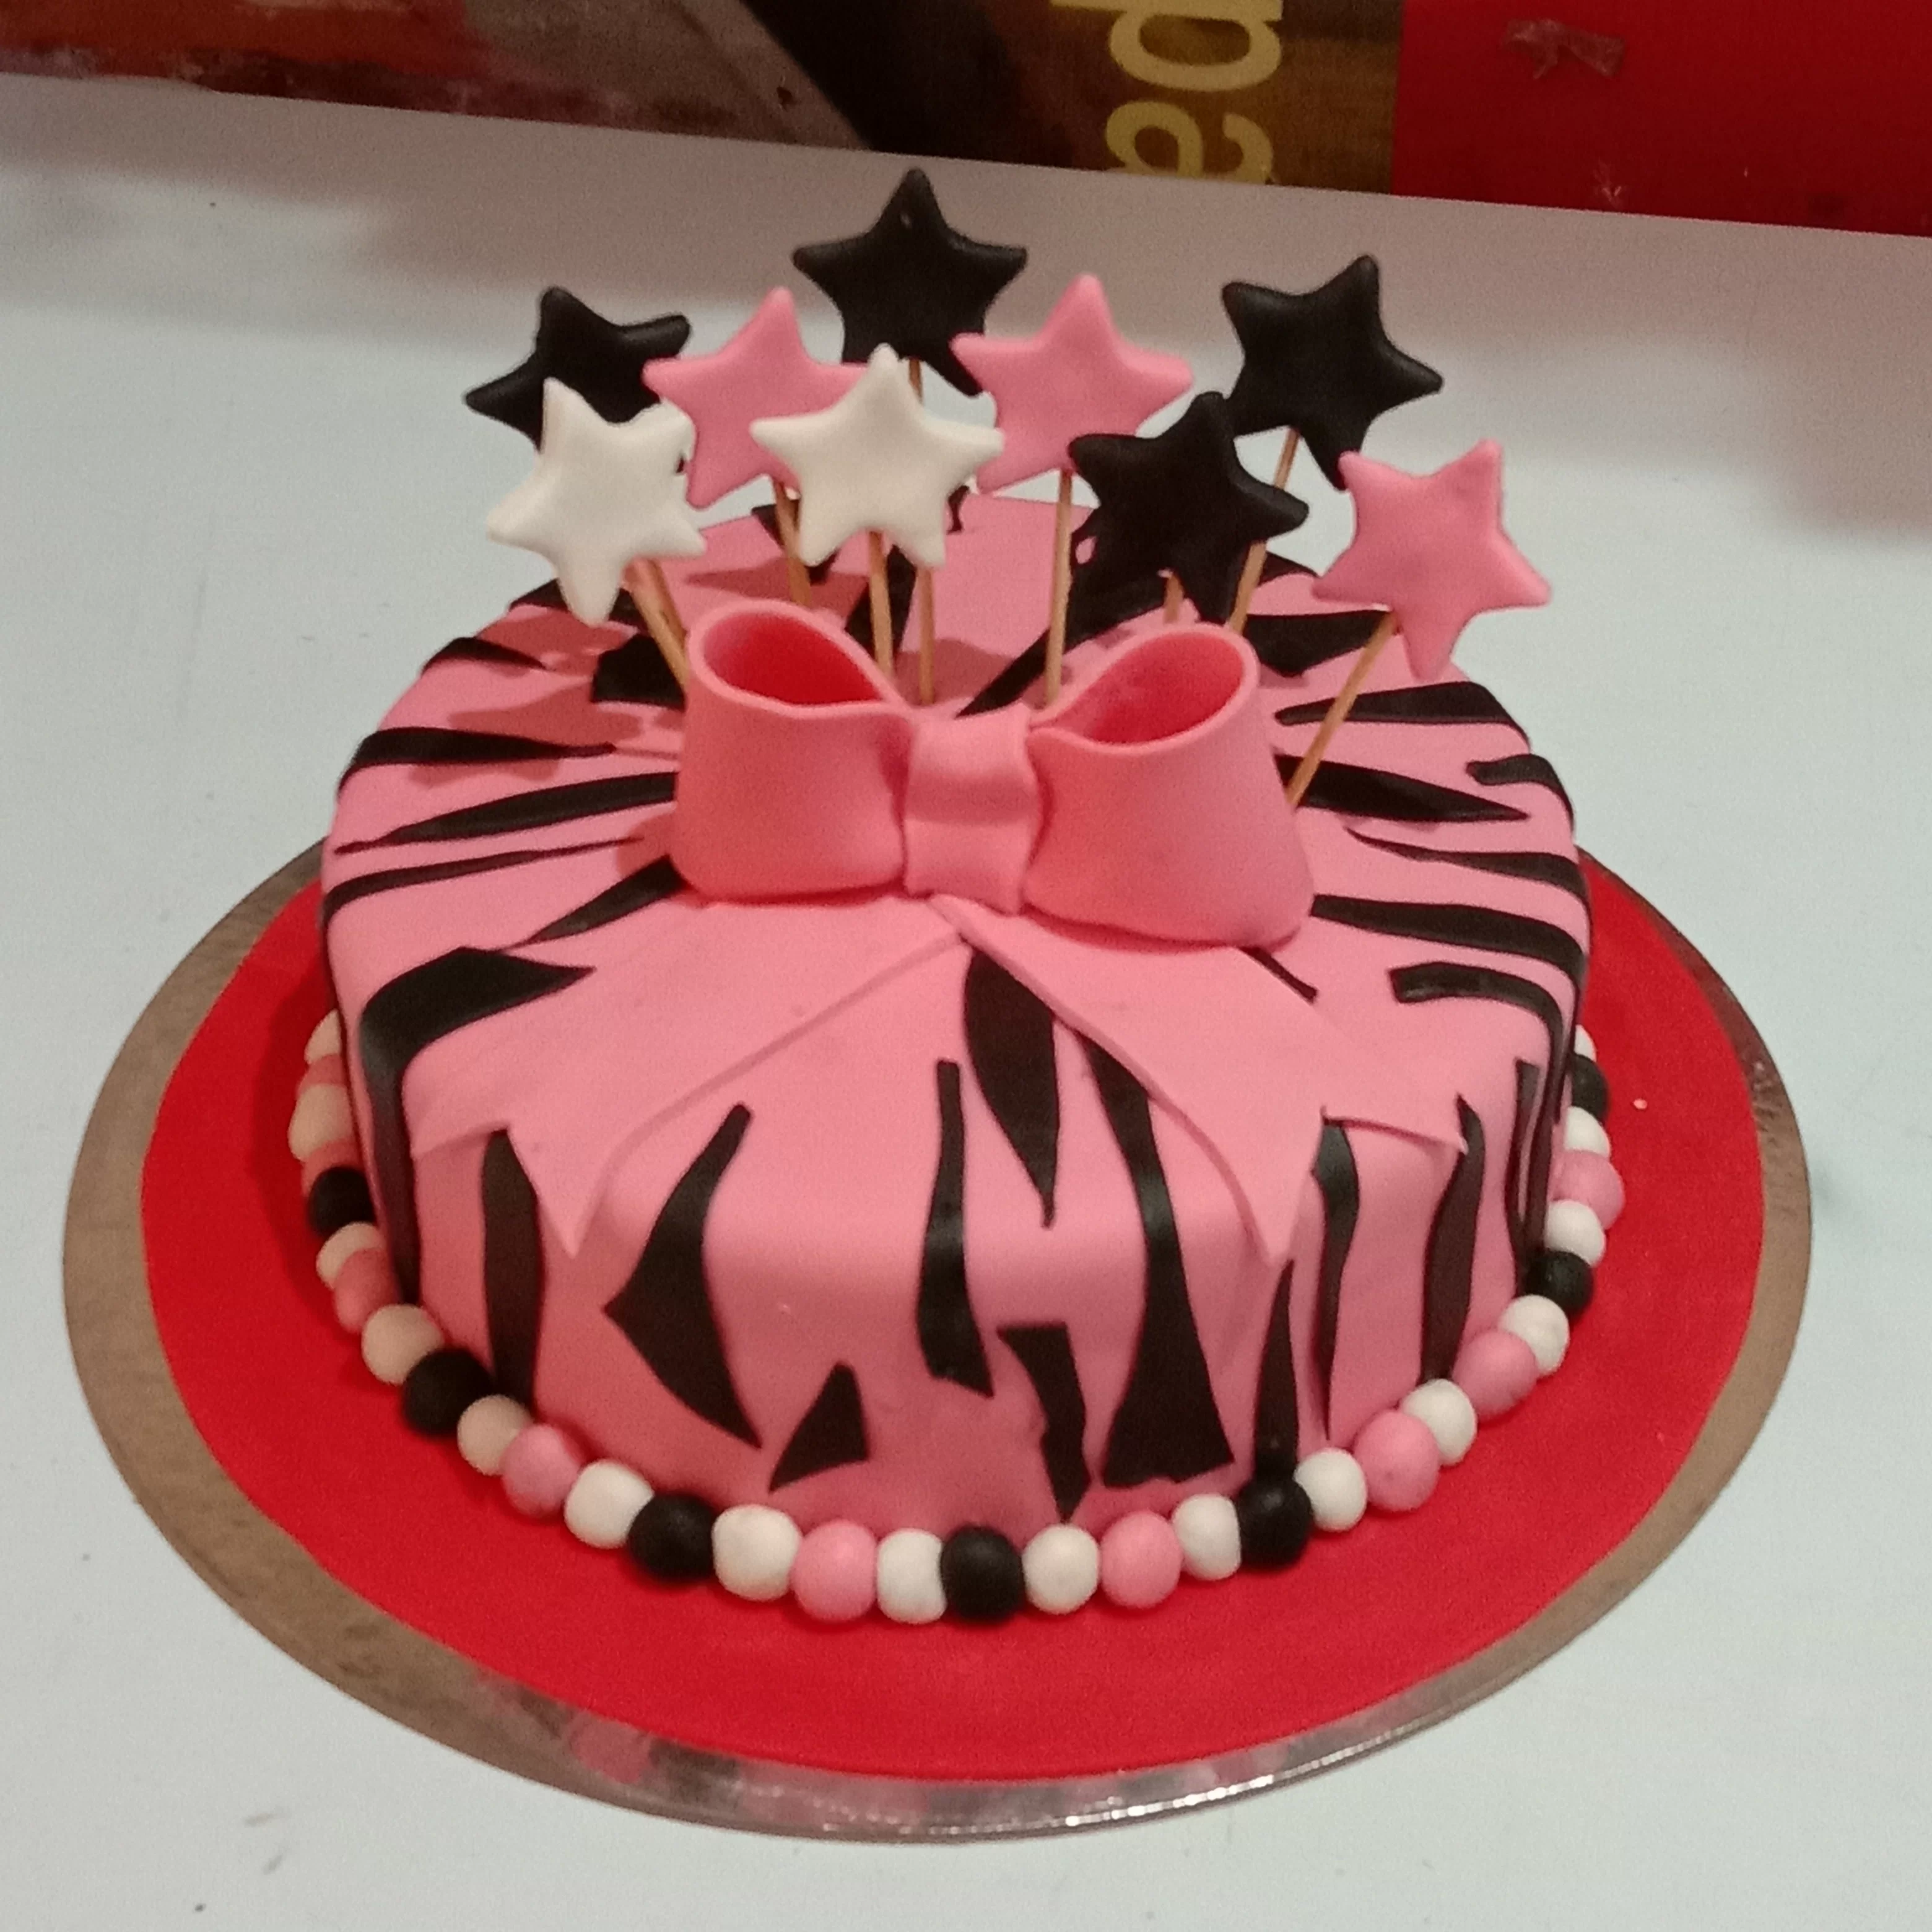 Bafford Cakes - Chocolate treat 16th birthday cake.... #birthdaycake # 16thbirthday #chocolate #handcrafted #celebrate | Facebook